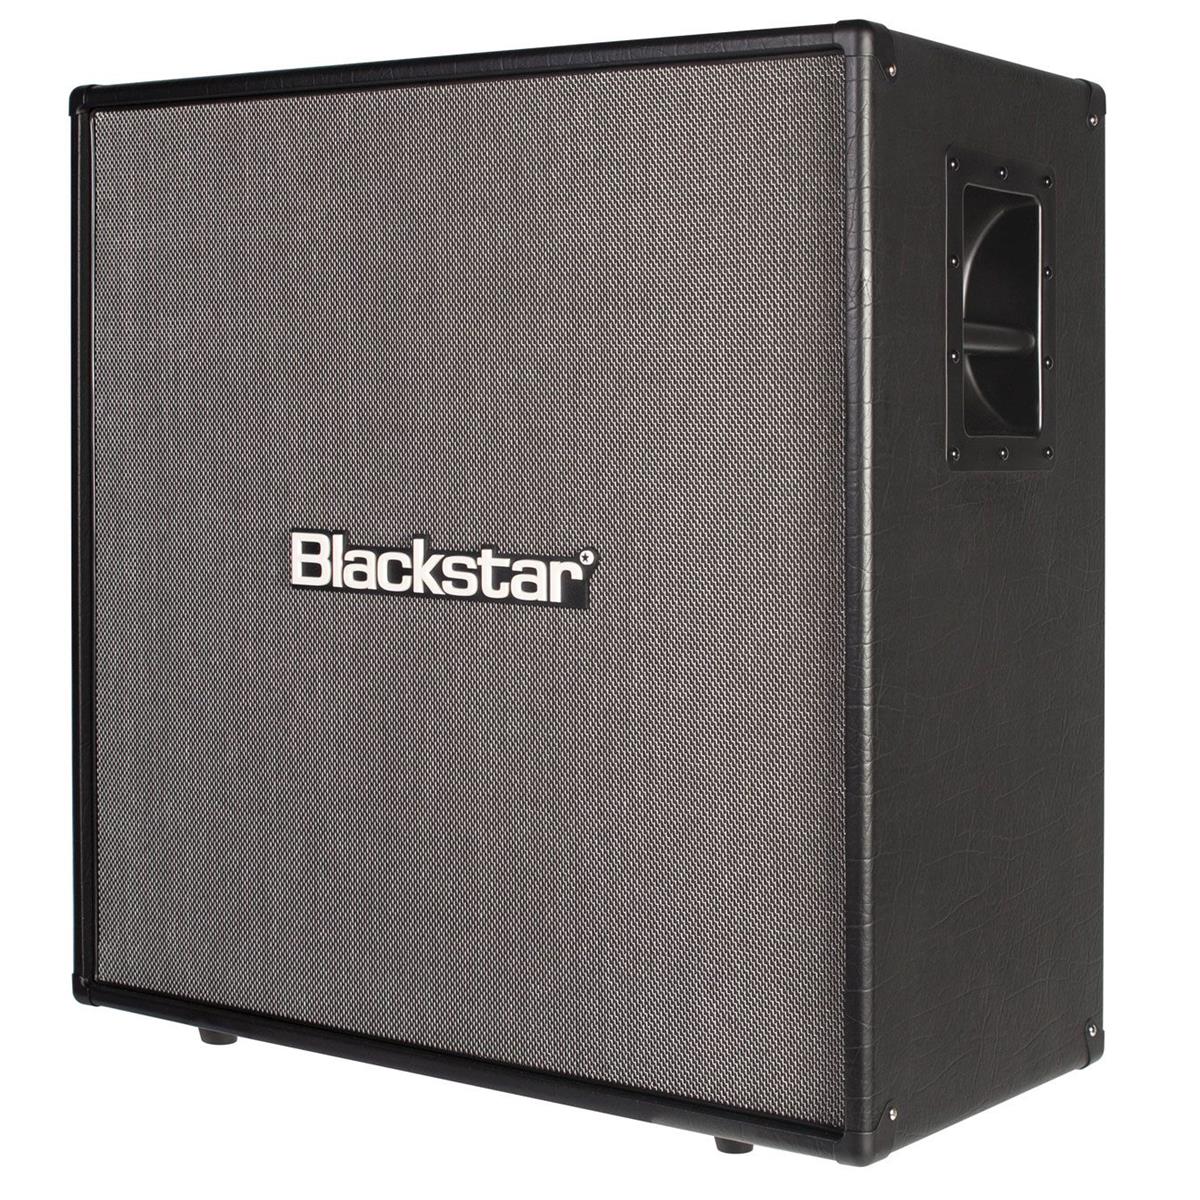 Blackstar HTV-412B MKII 320W 4x12 Speaker Cabinet for Electric Guitar Amplifiers -  HTV412BMKII